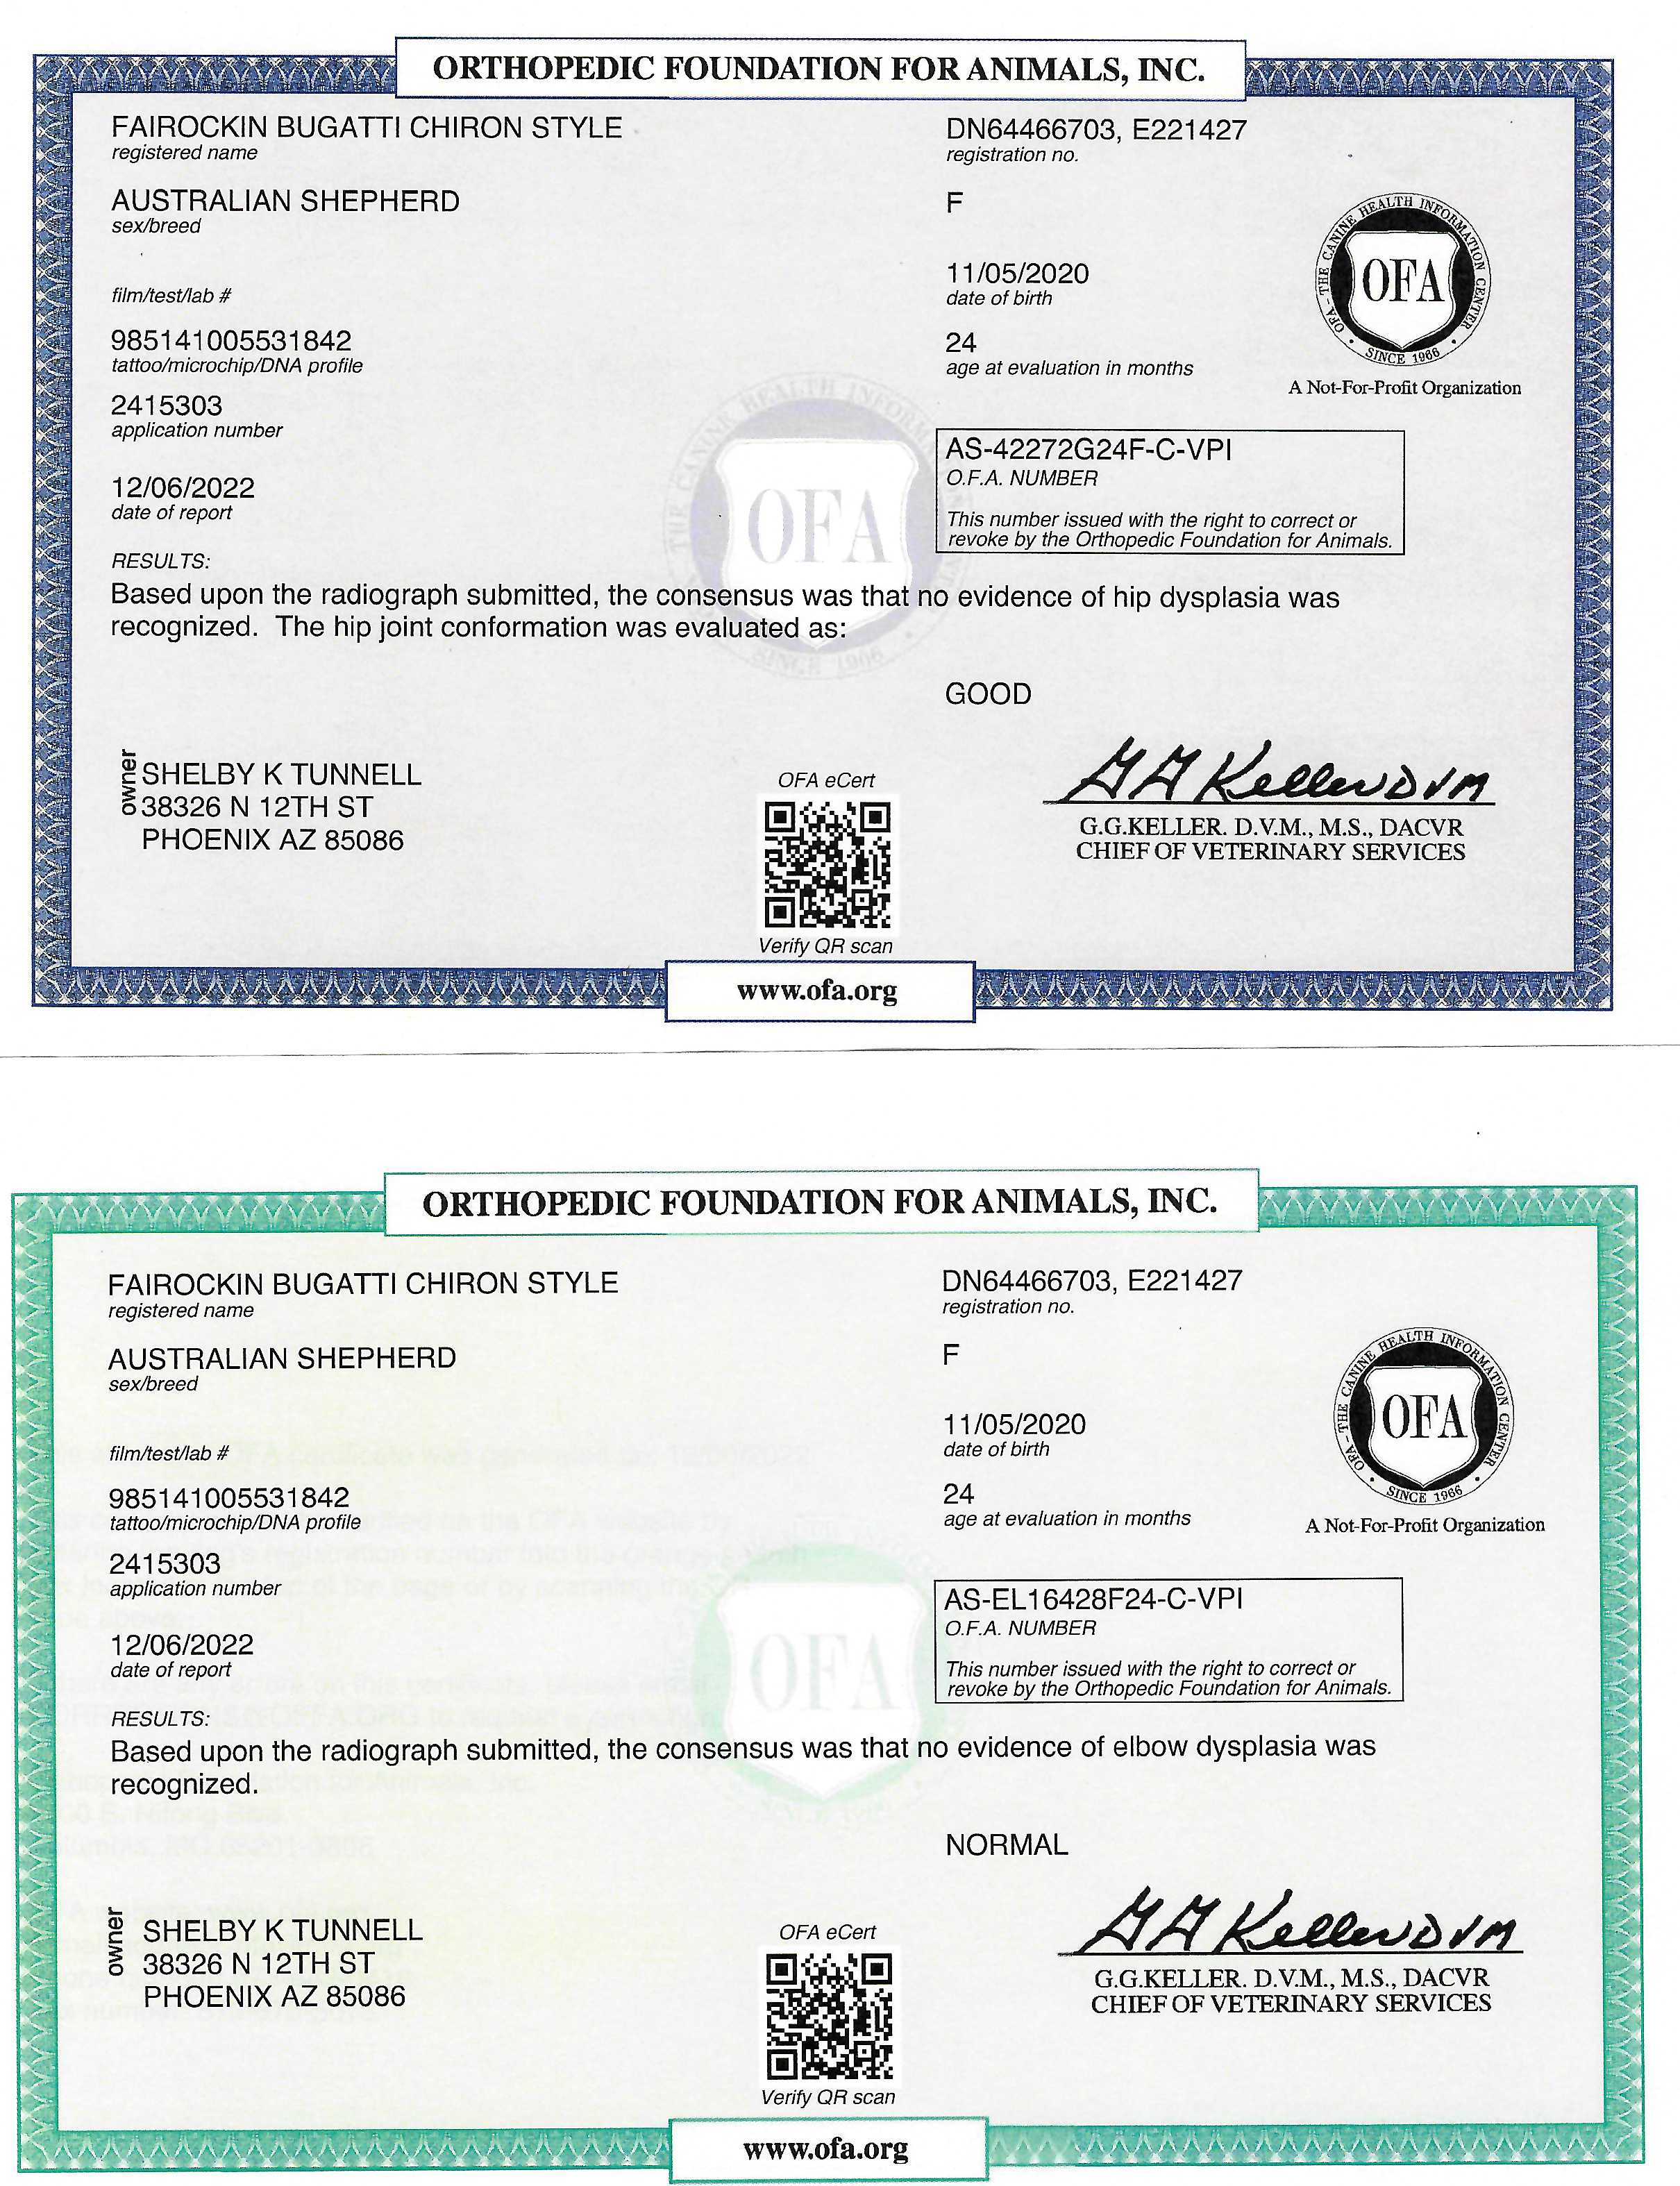 Fairockin Bugatti Chiron Style OFA Certificates